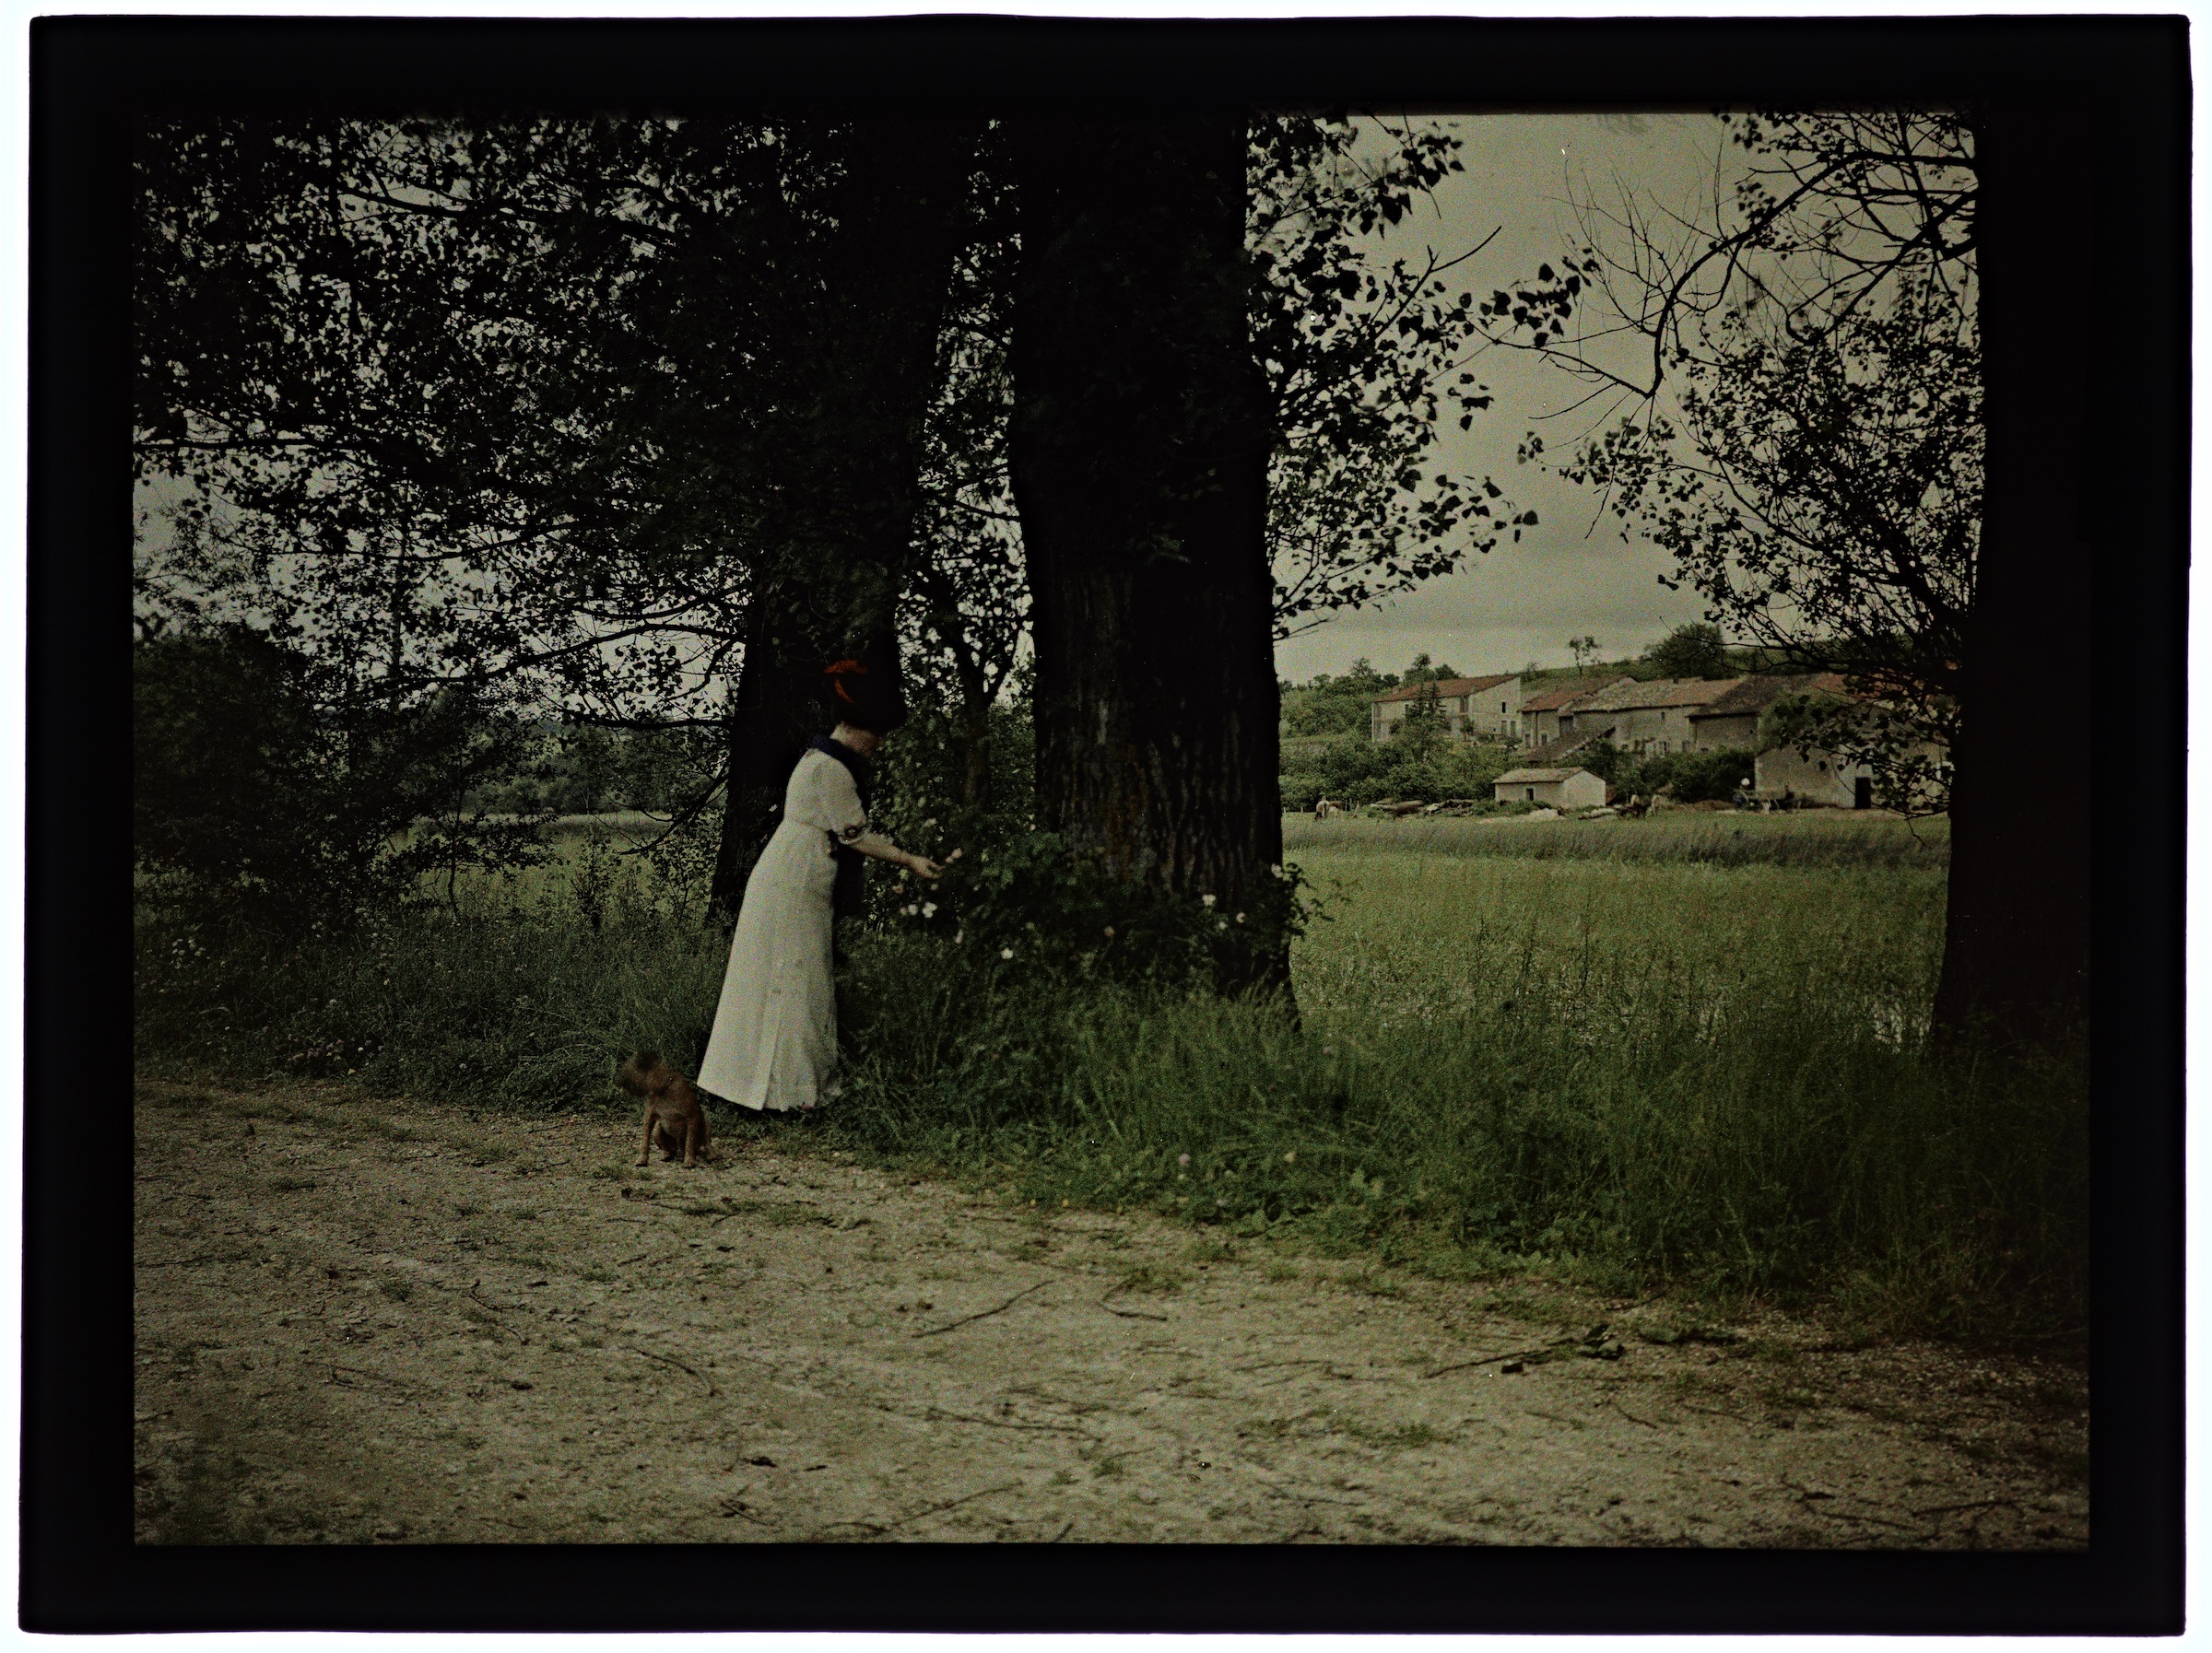 Femme dans la campagne, village